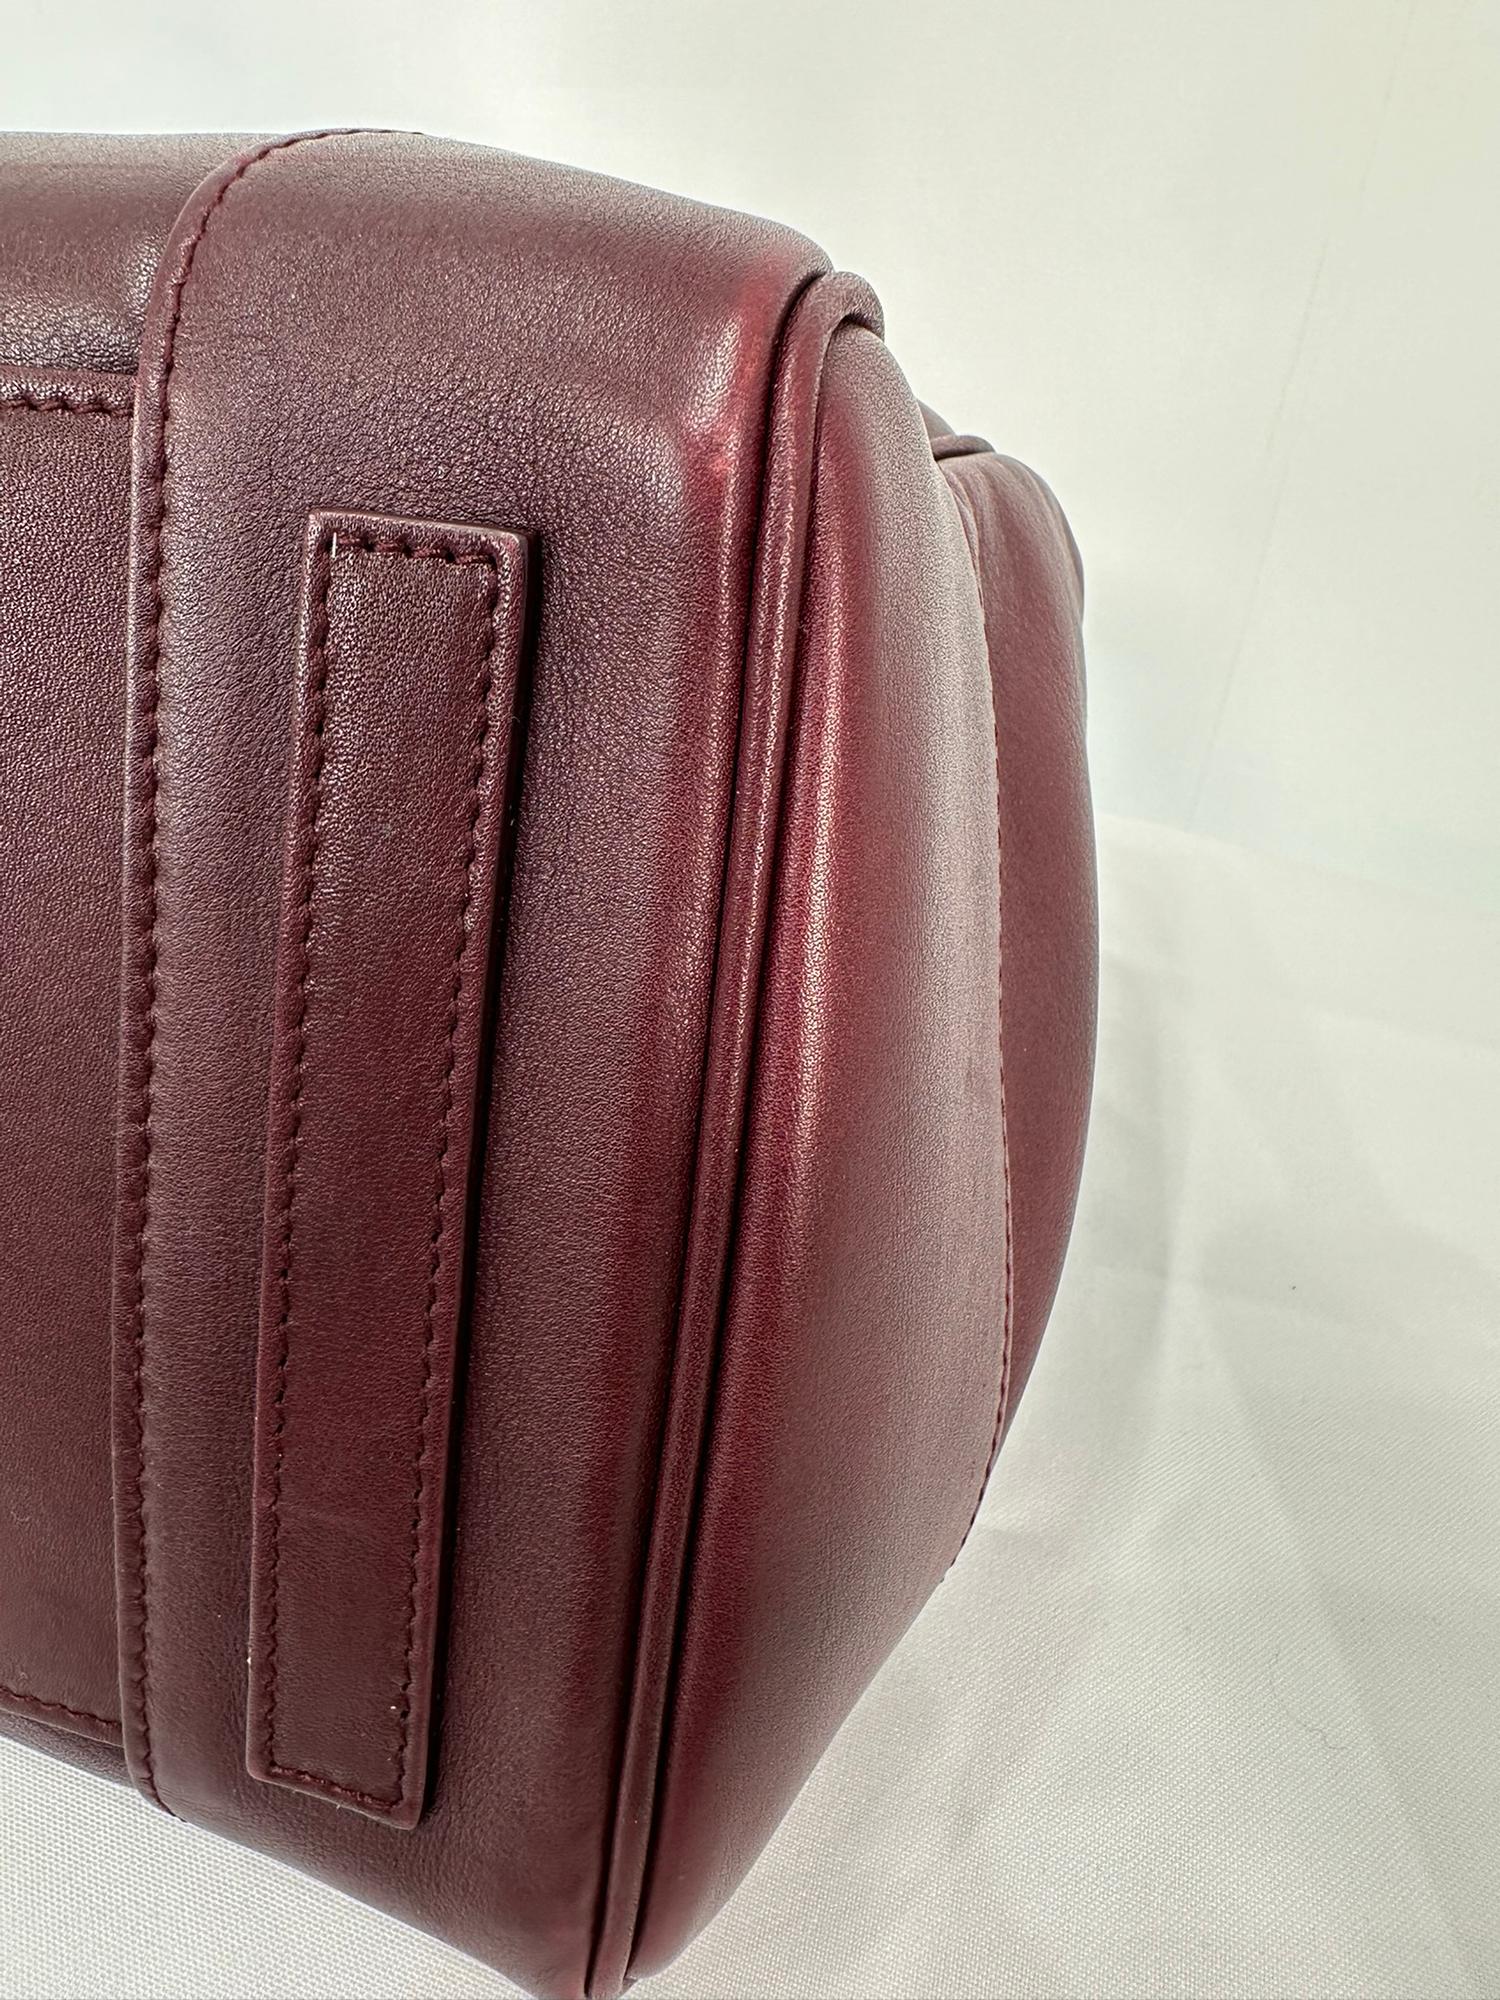 Ralph Lauren Luxe Burgundy Calf Ricky 33 Gold Hardware Handbag with Accessories 9